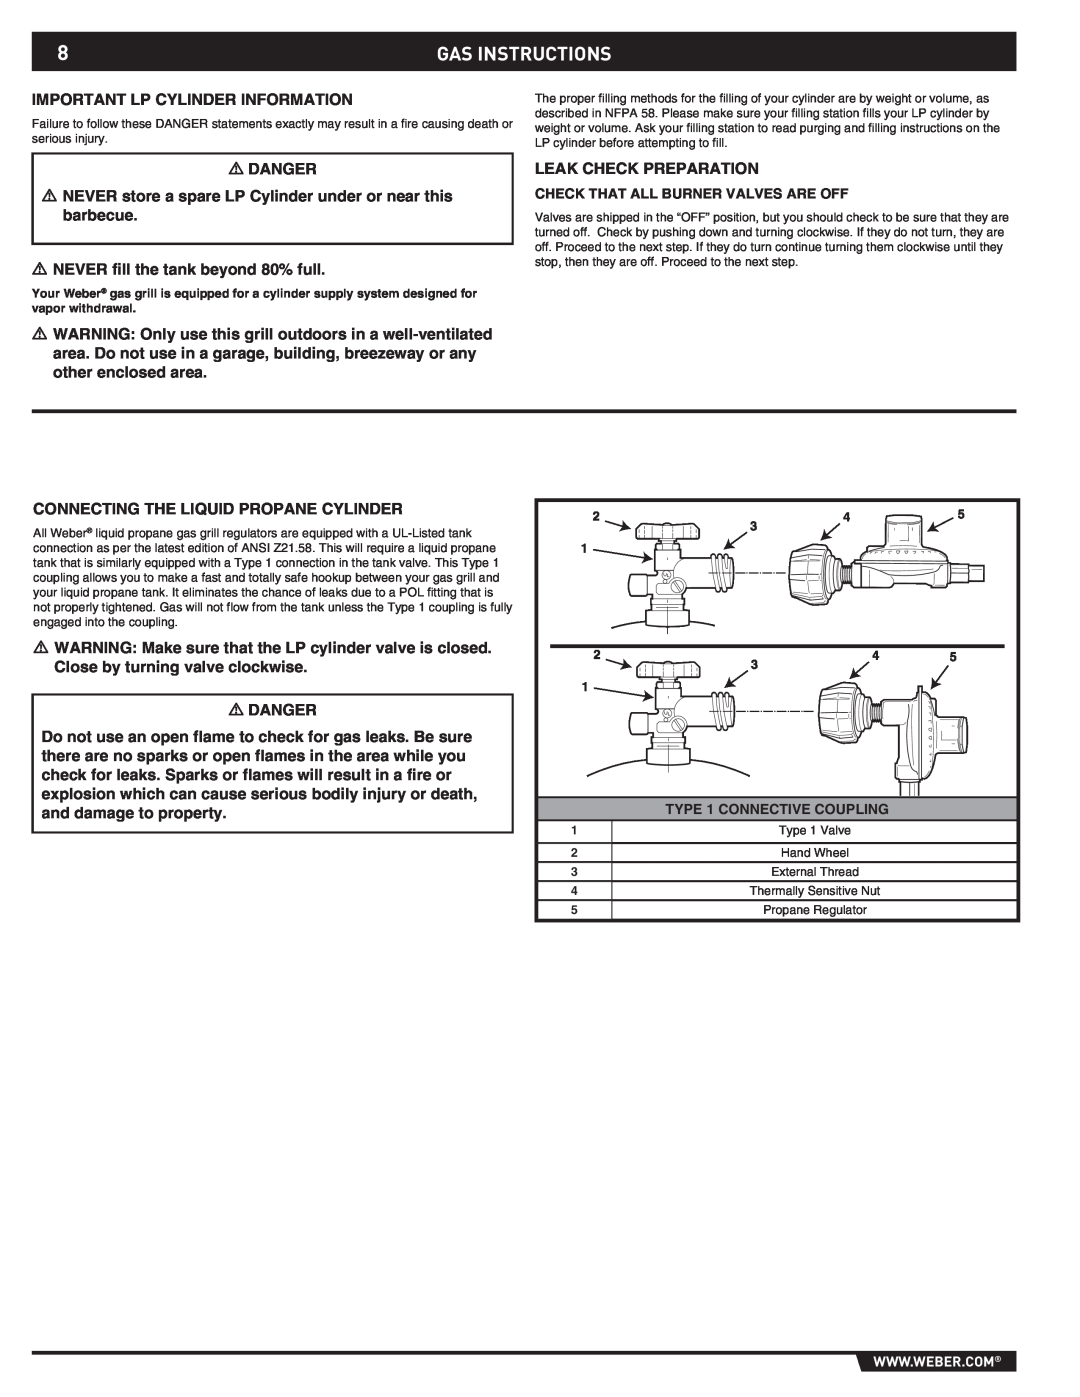 Weber 43176 manual Gas Instructions, Important Lp Cylinder Information 